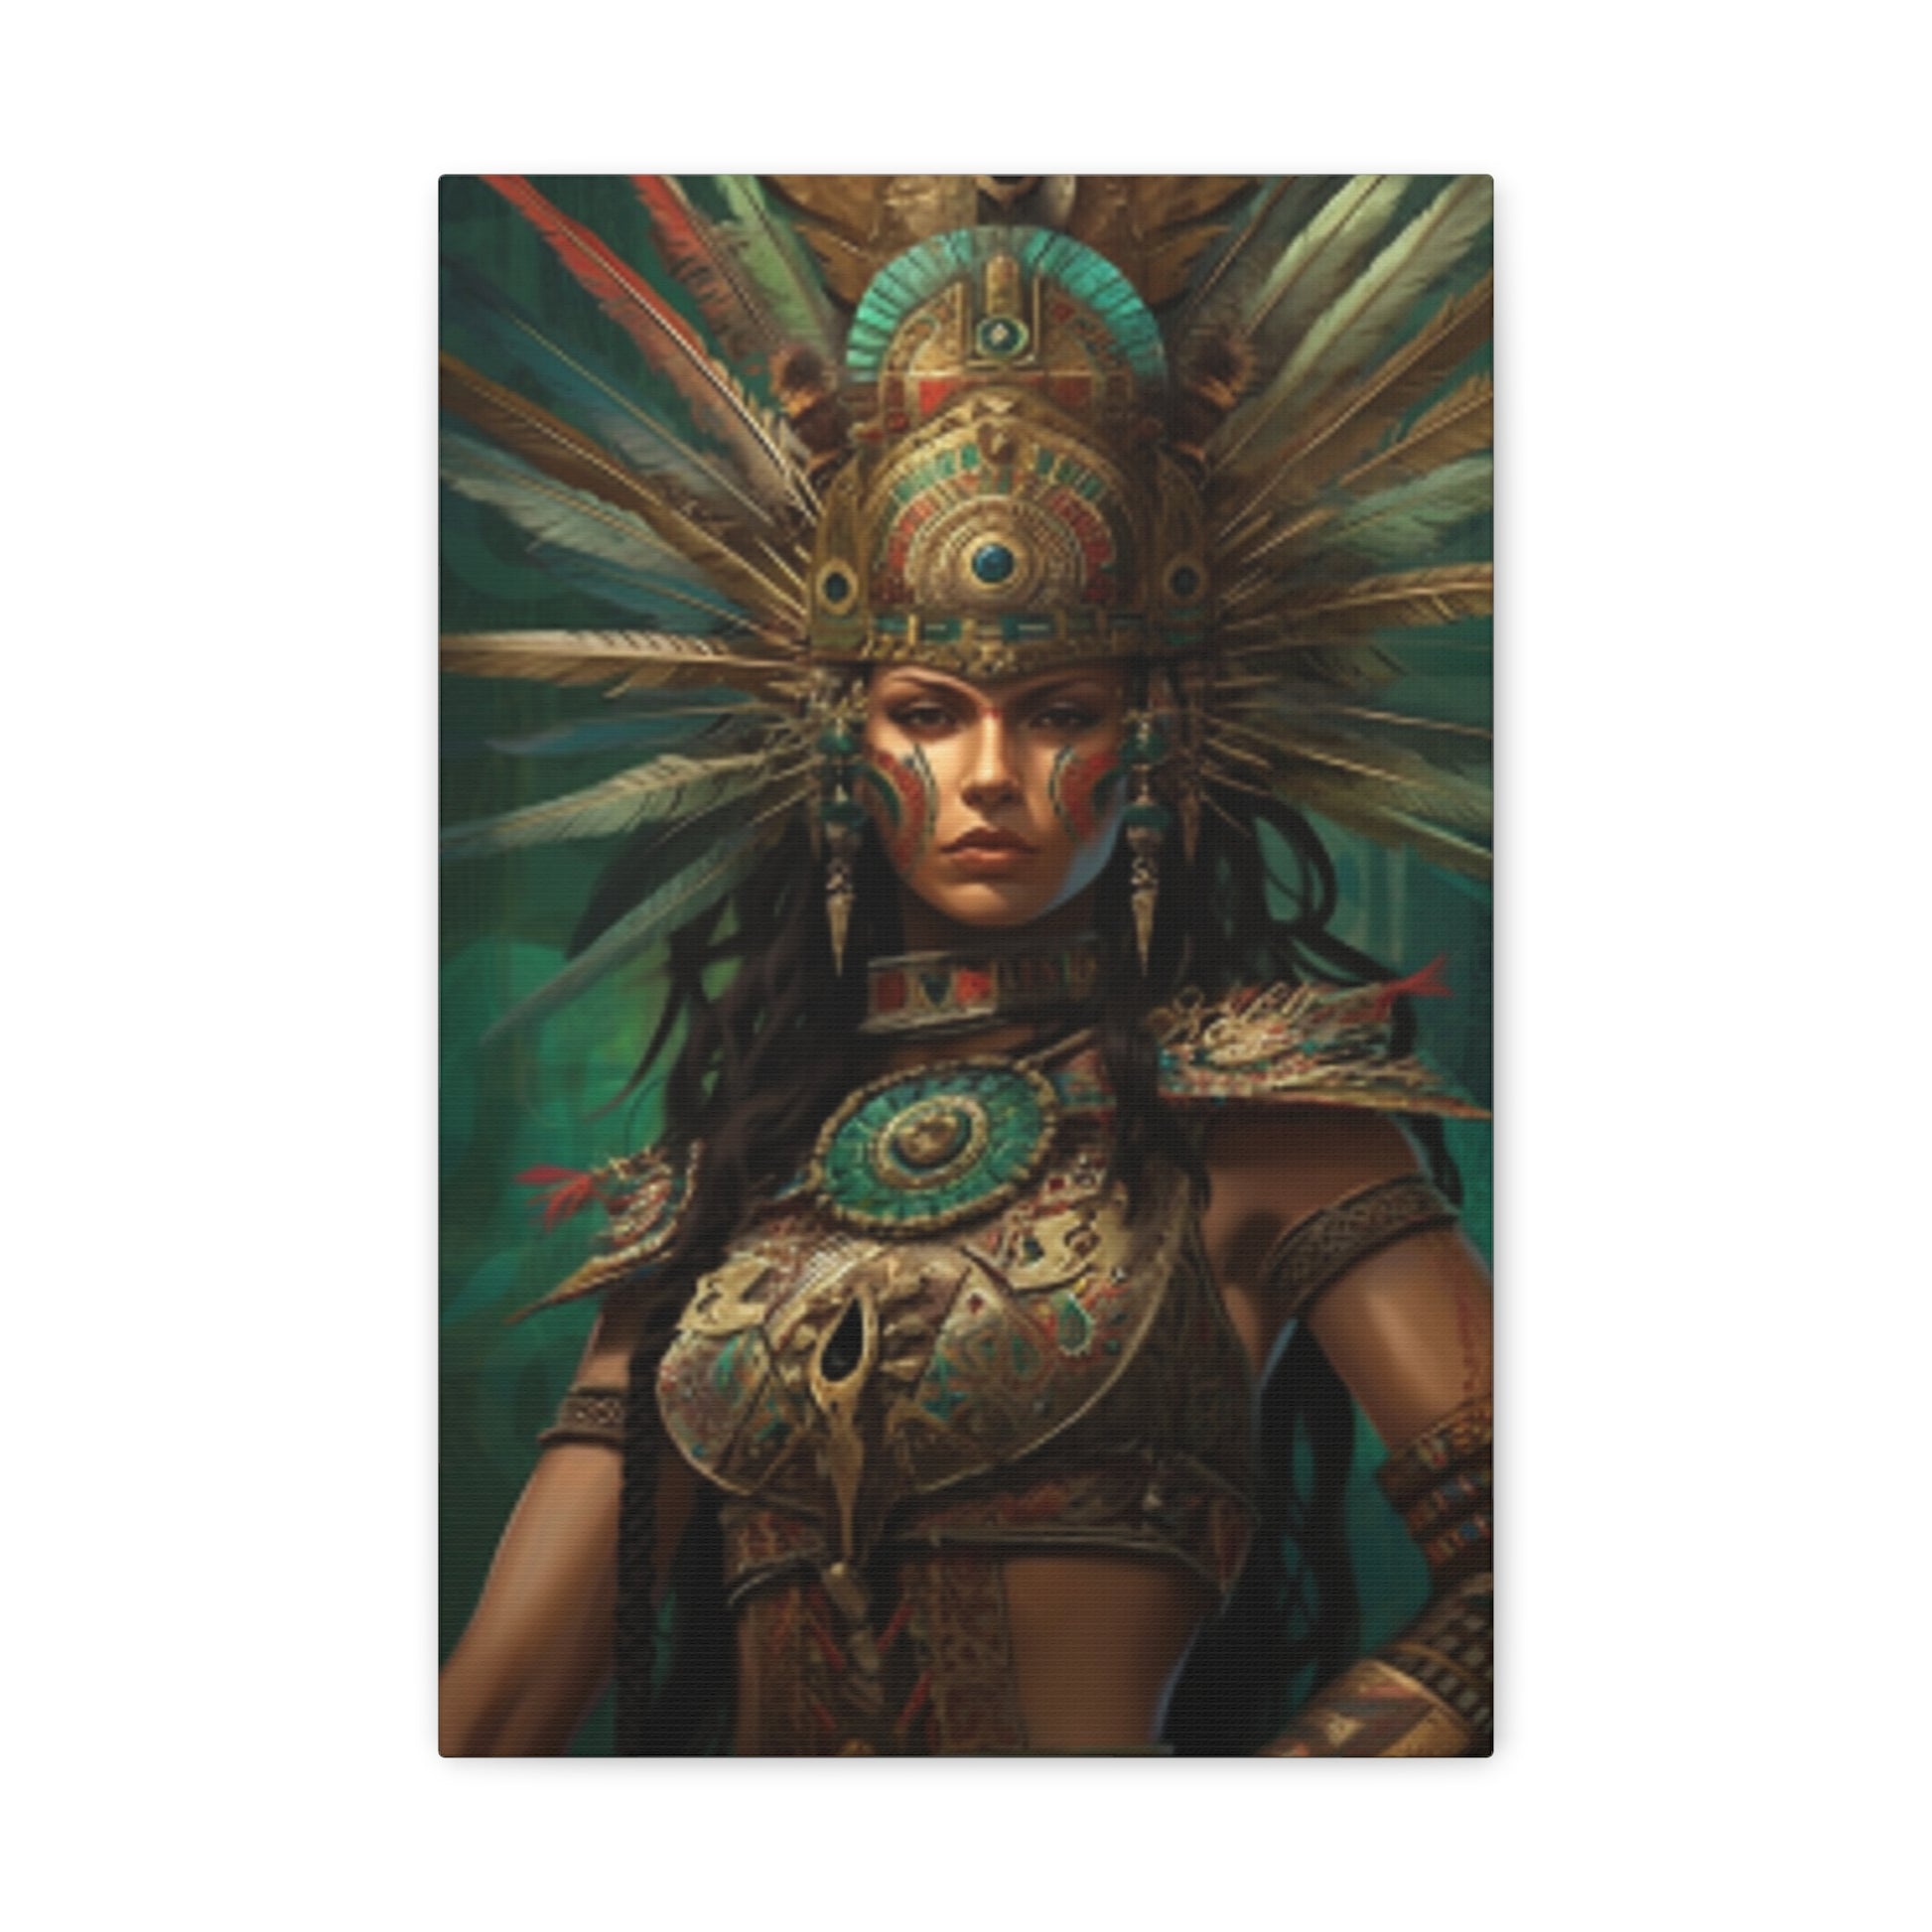 aztec warrior goddess costume